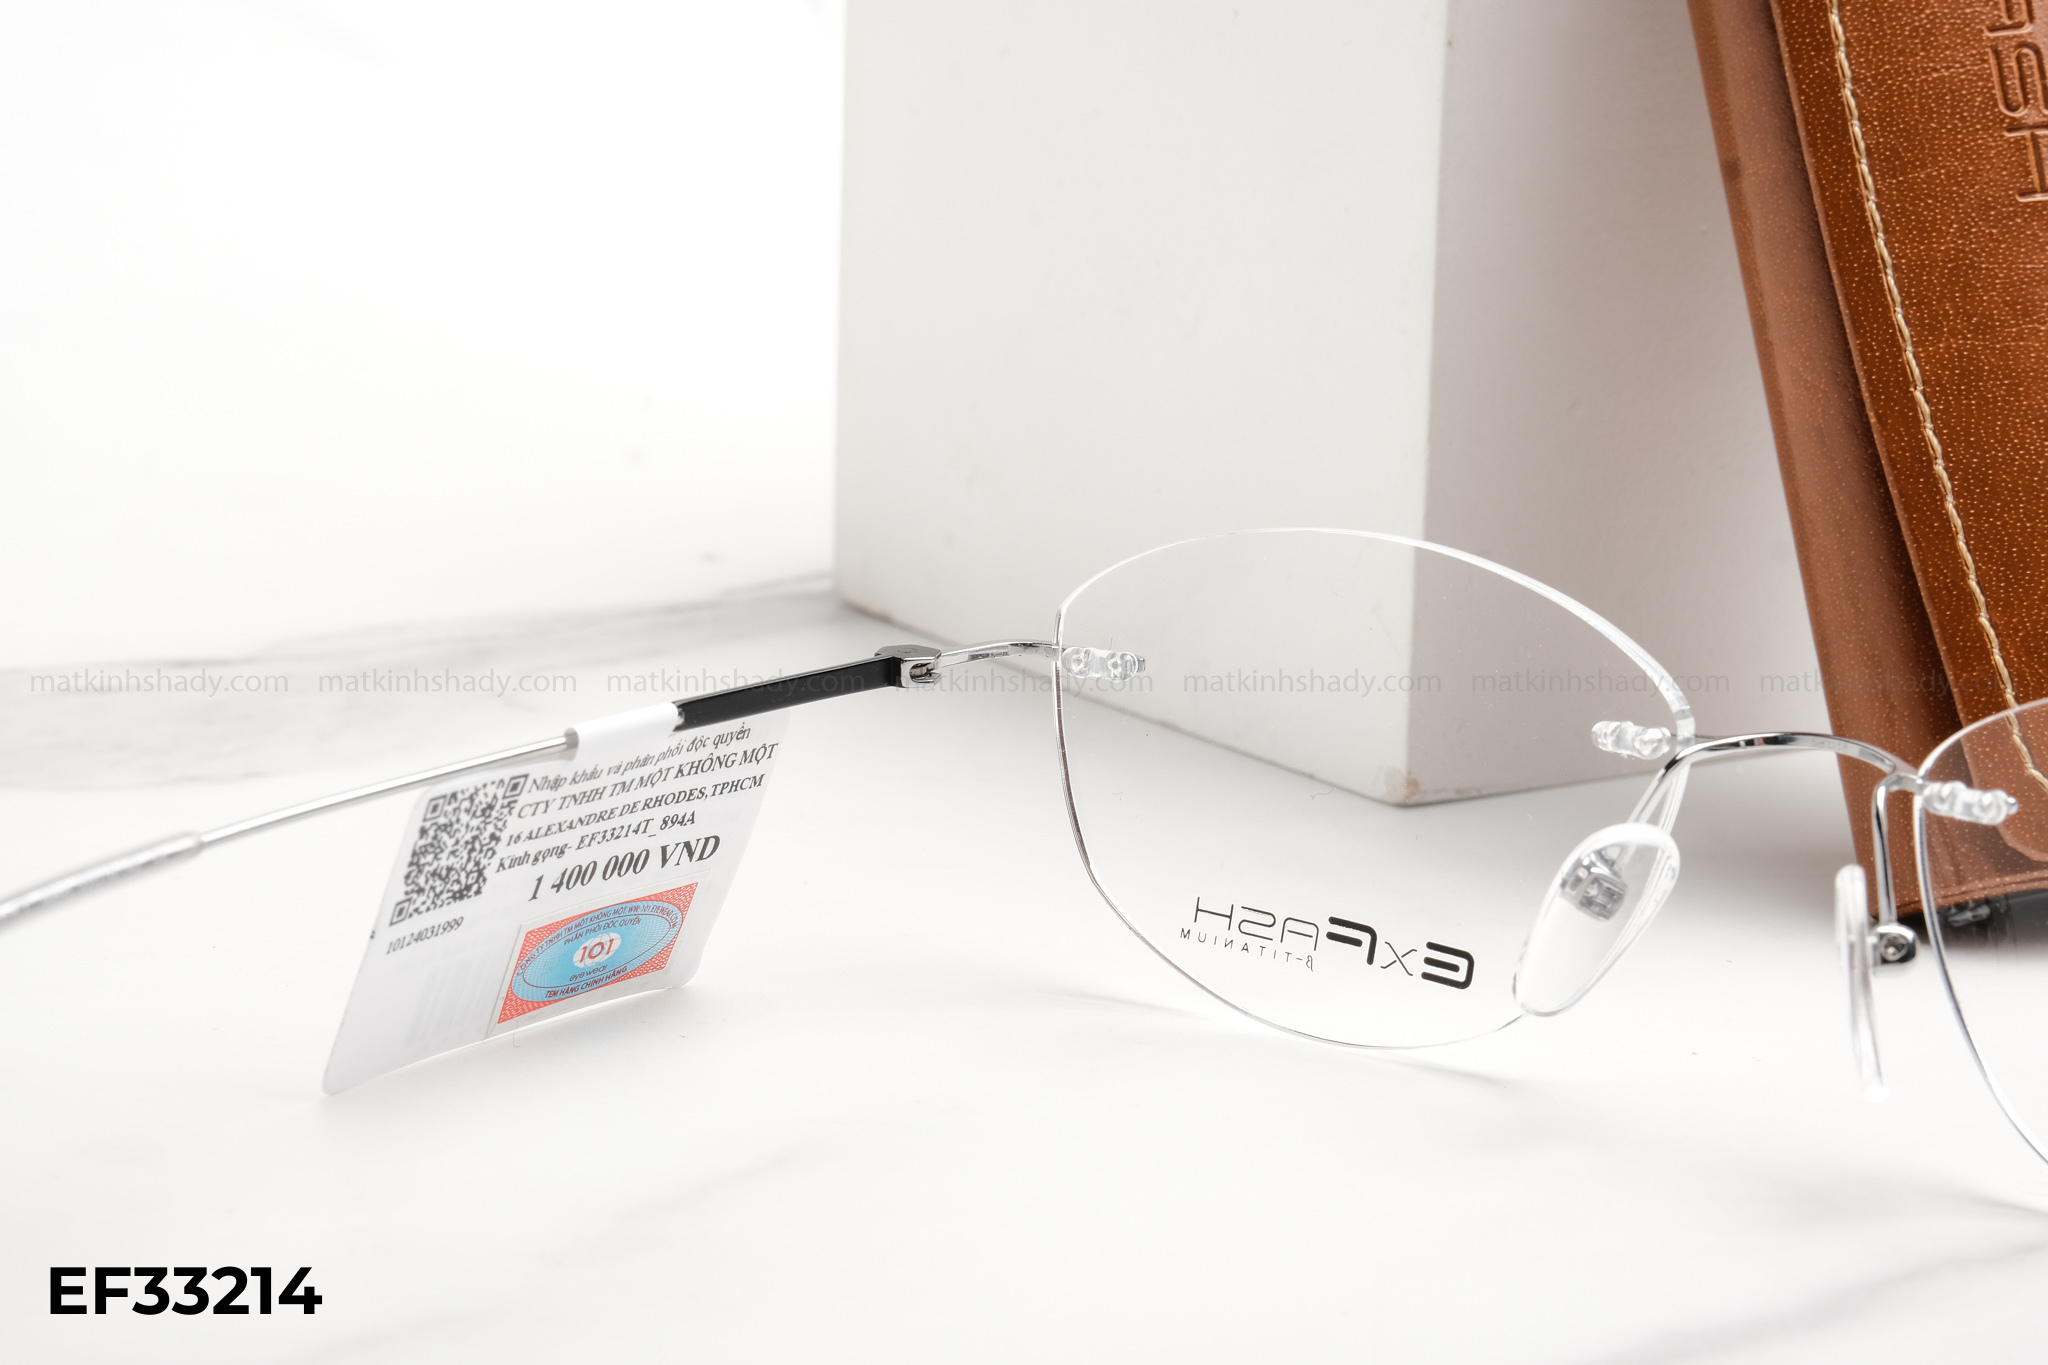  Exfash Eyewear - Glasses - EF33214 